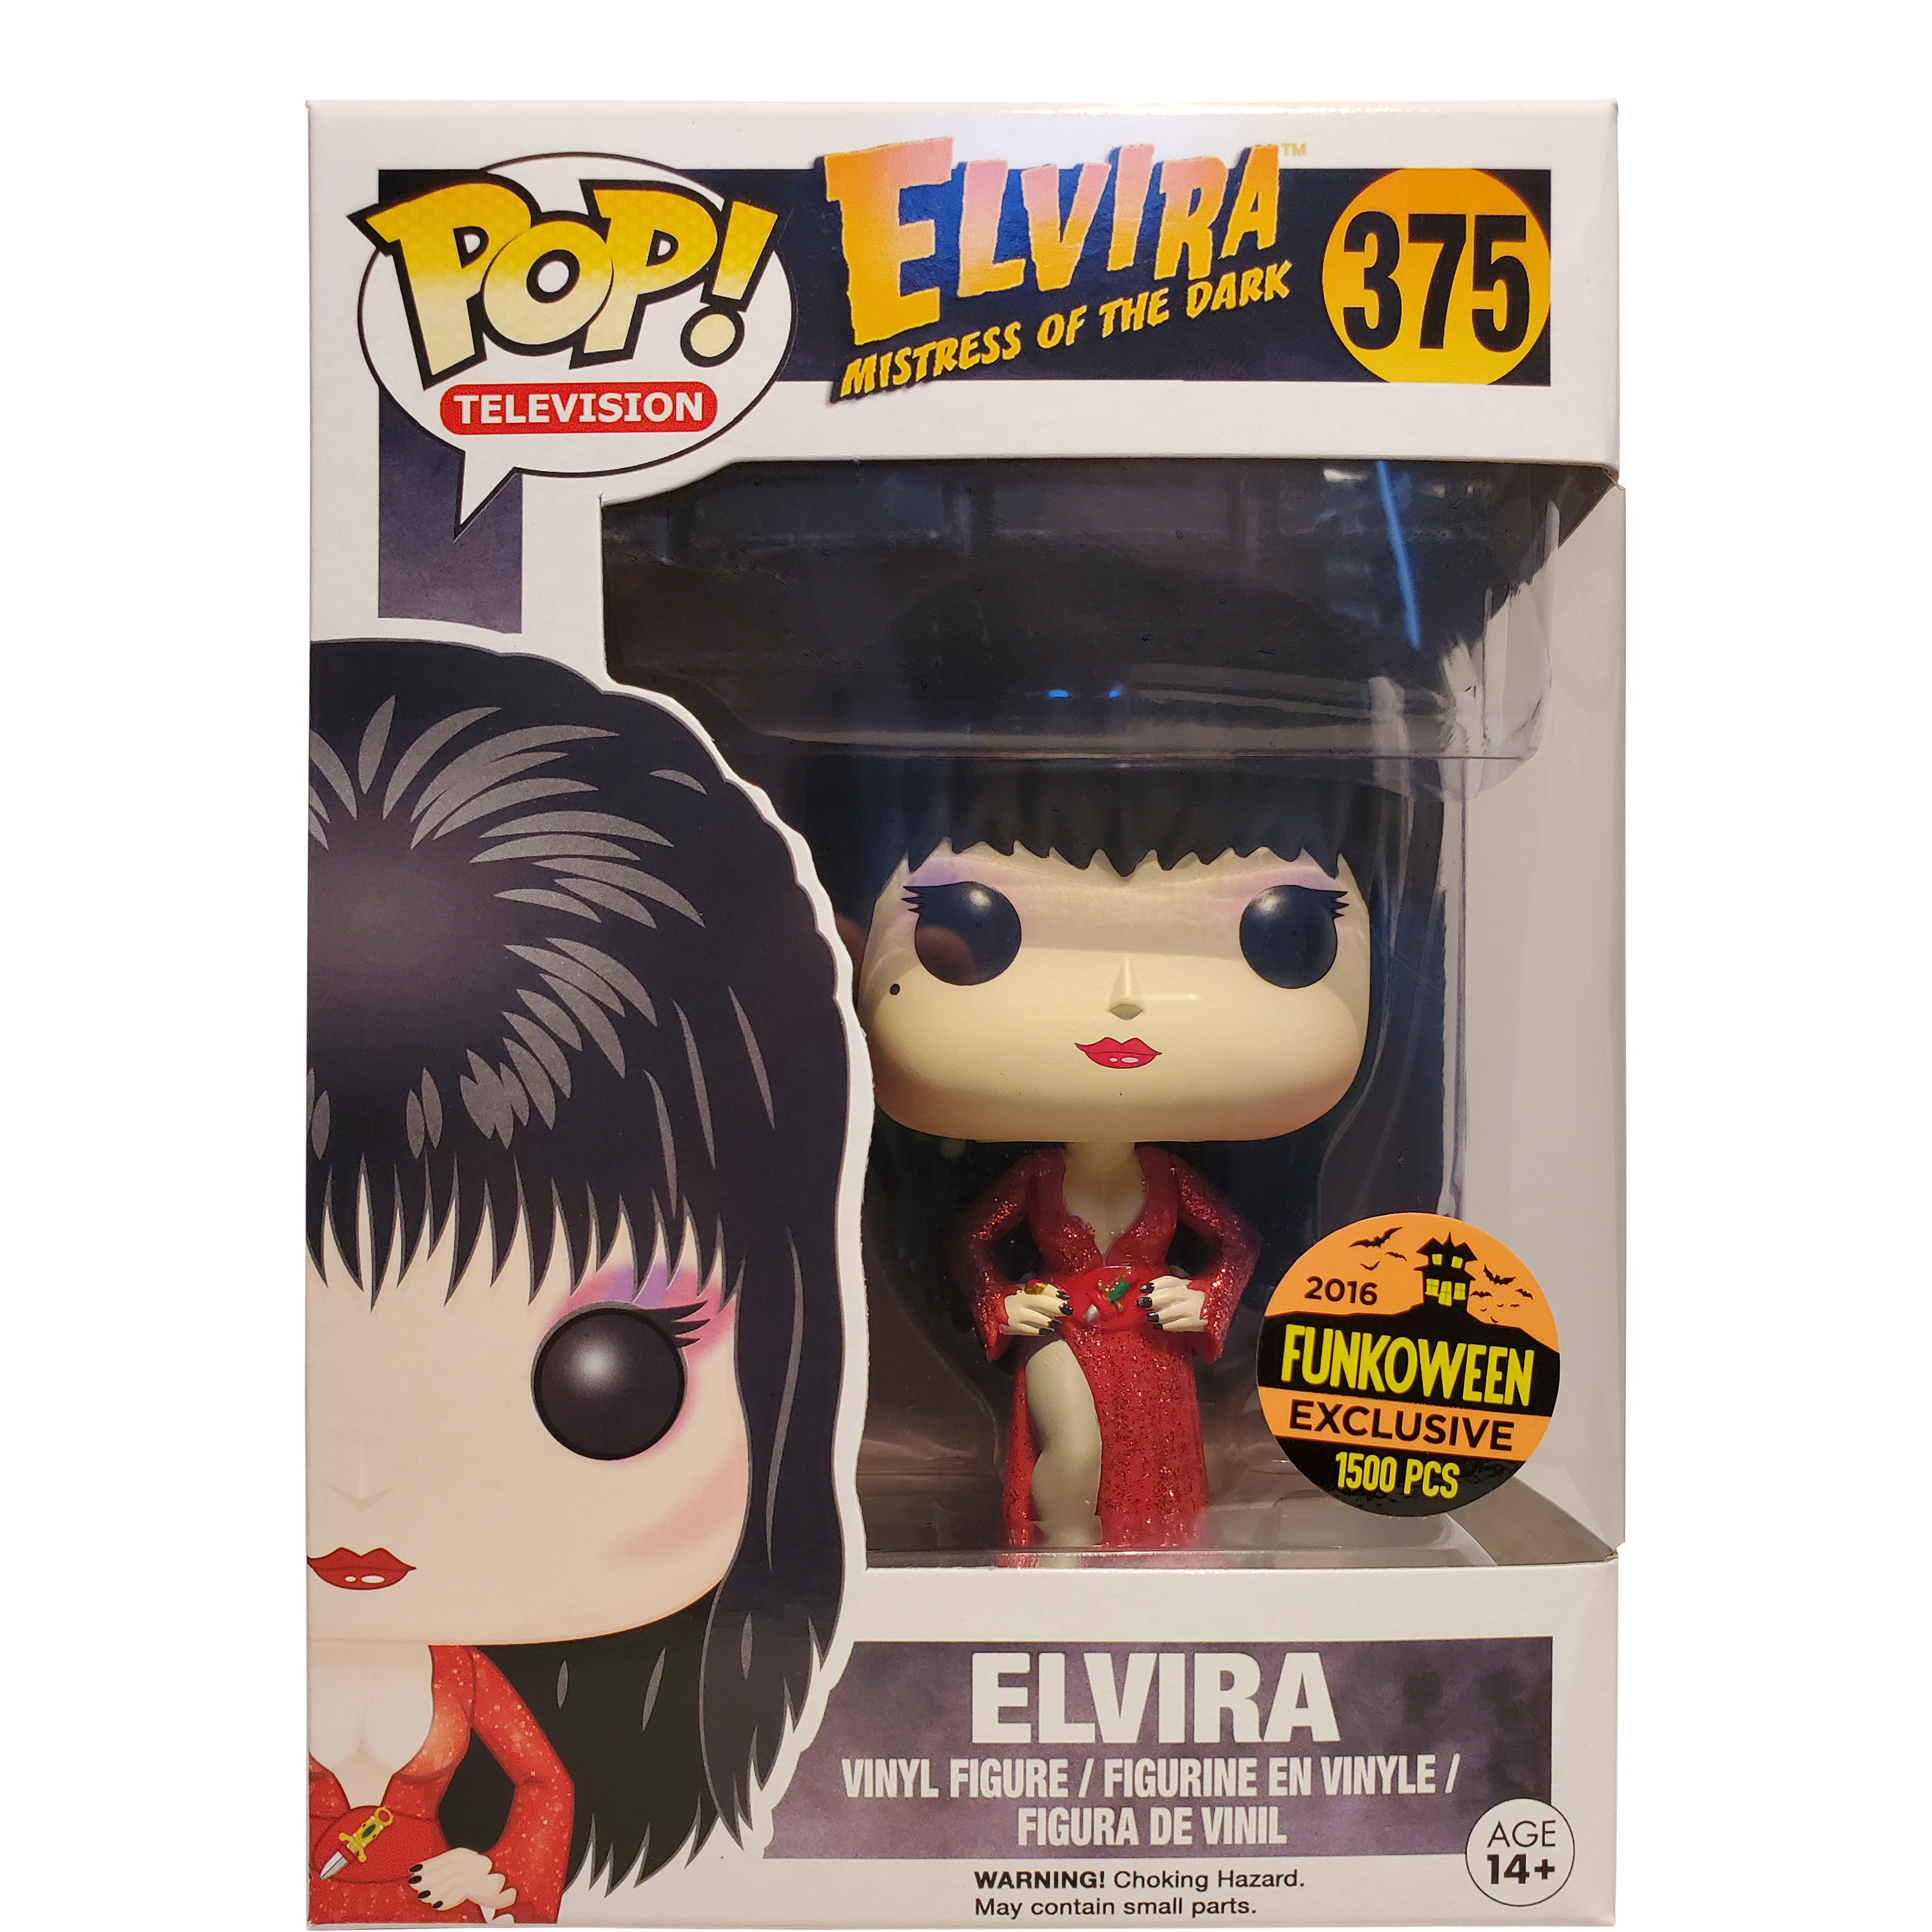 Funko Pop! Television Elvira Mistress of the Dark (Red) Funkoween 